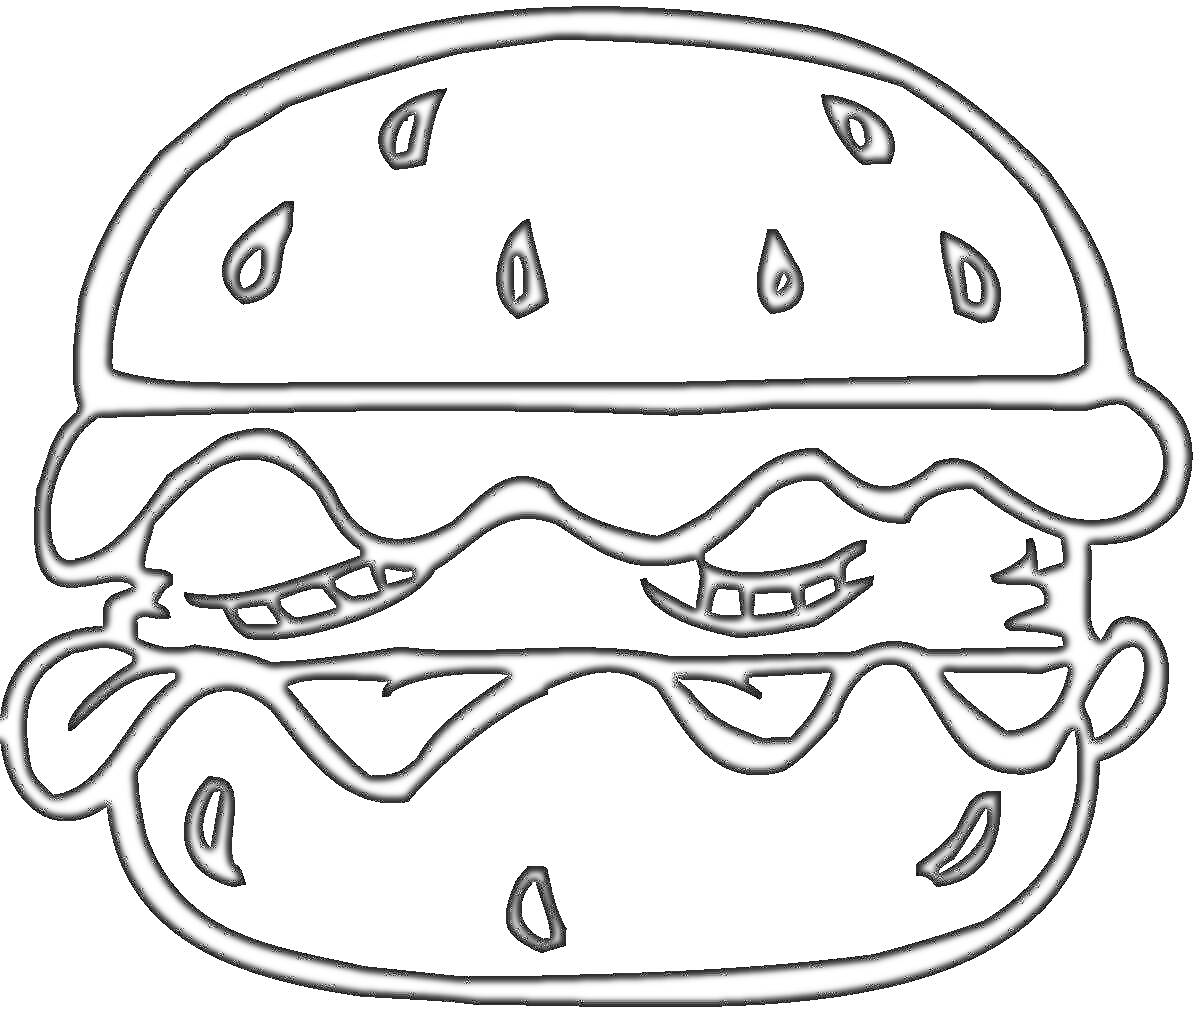 На раскраске изображено: Бургер, Еда, Булочка, Листья салата, Контурное изображение